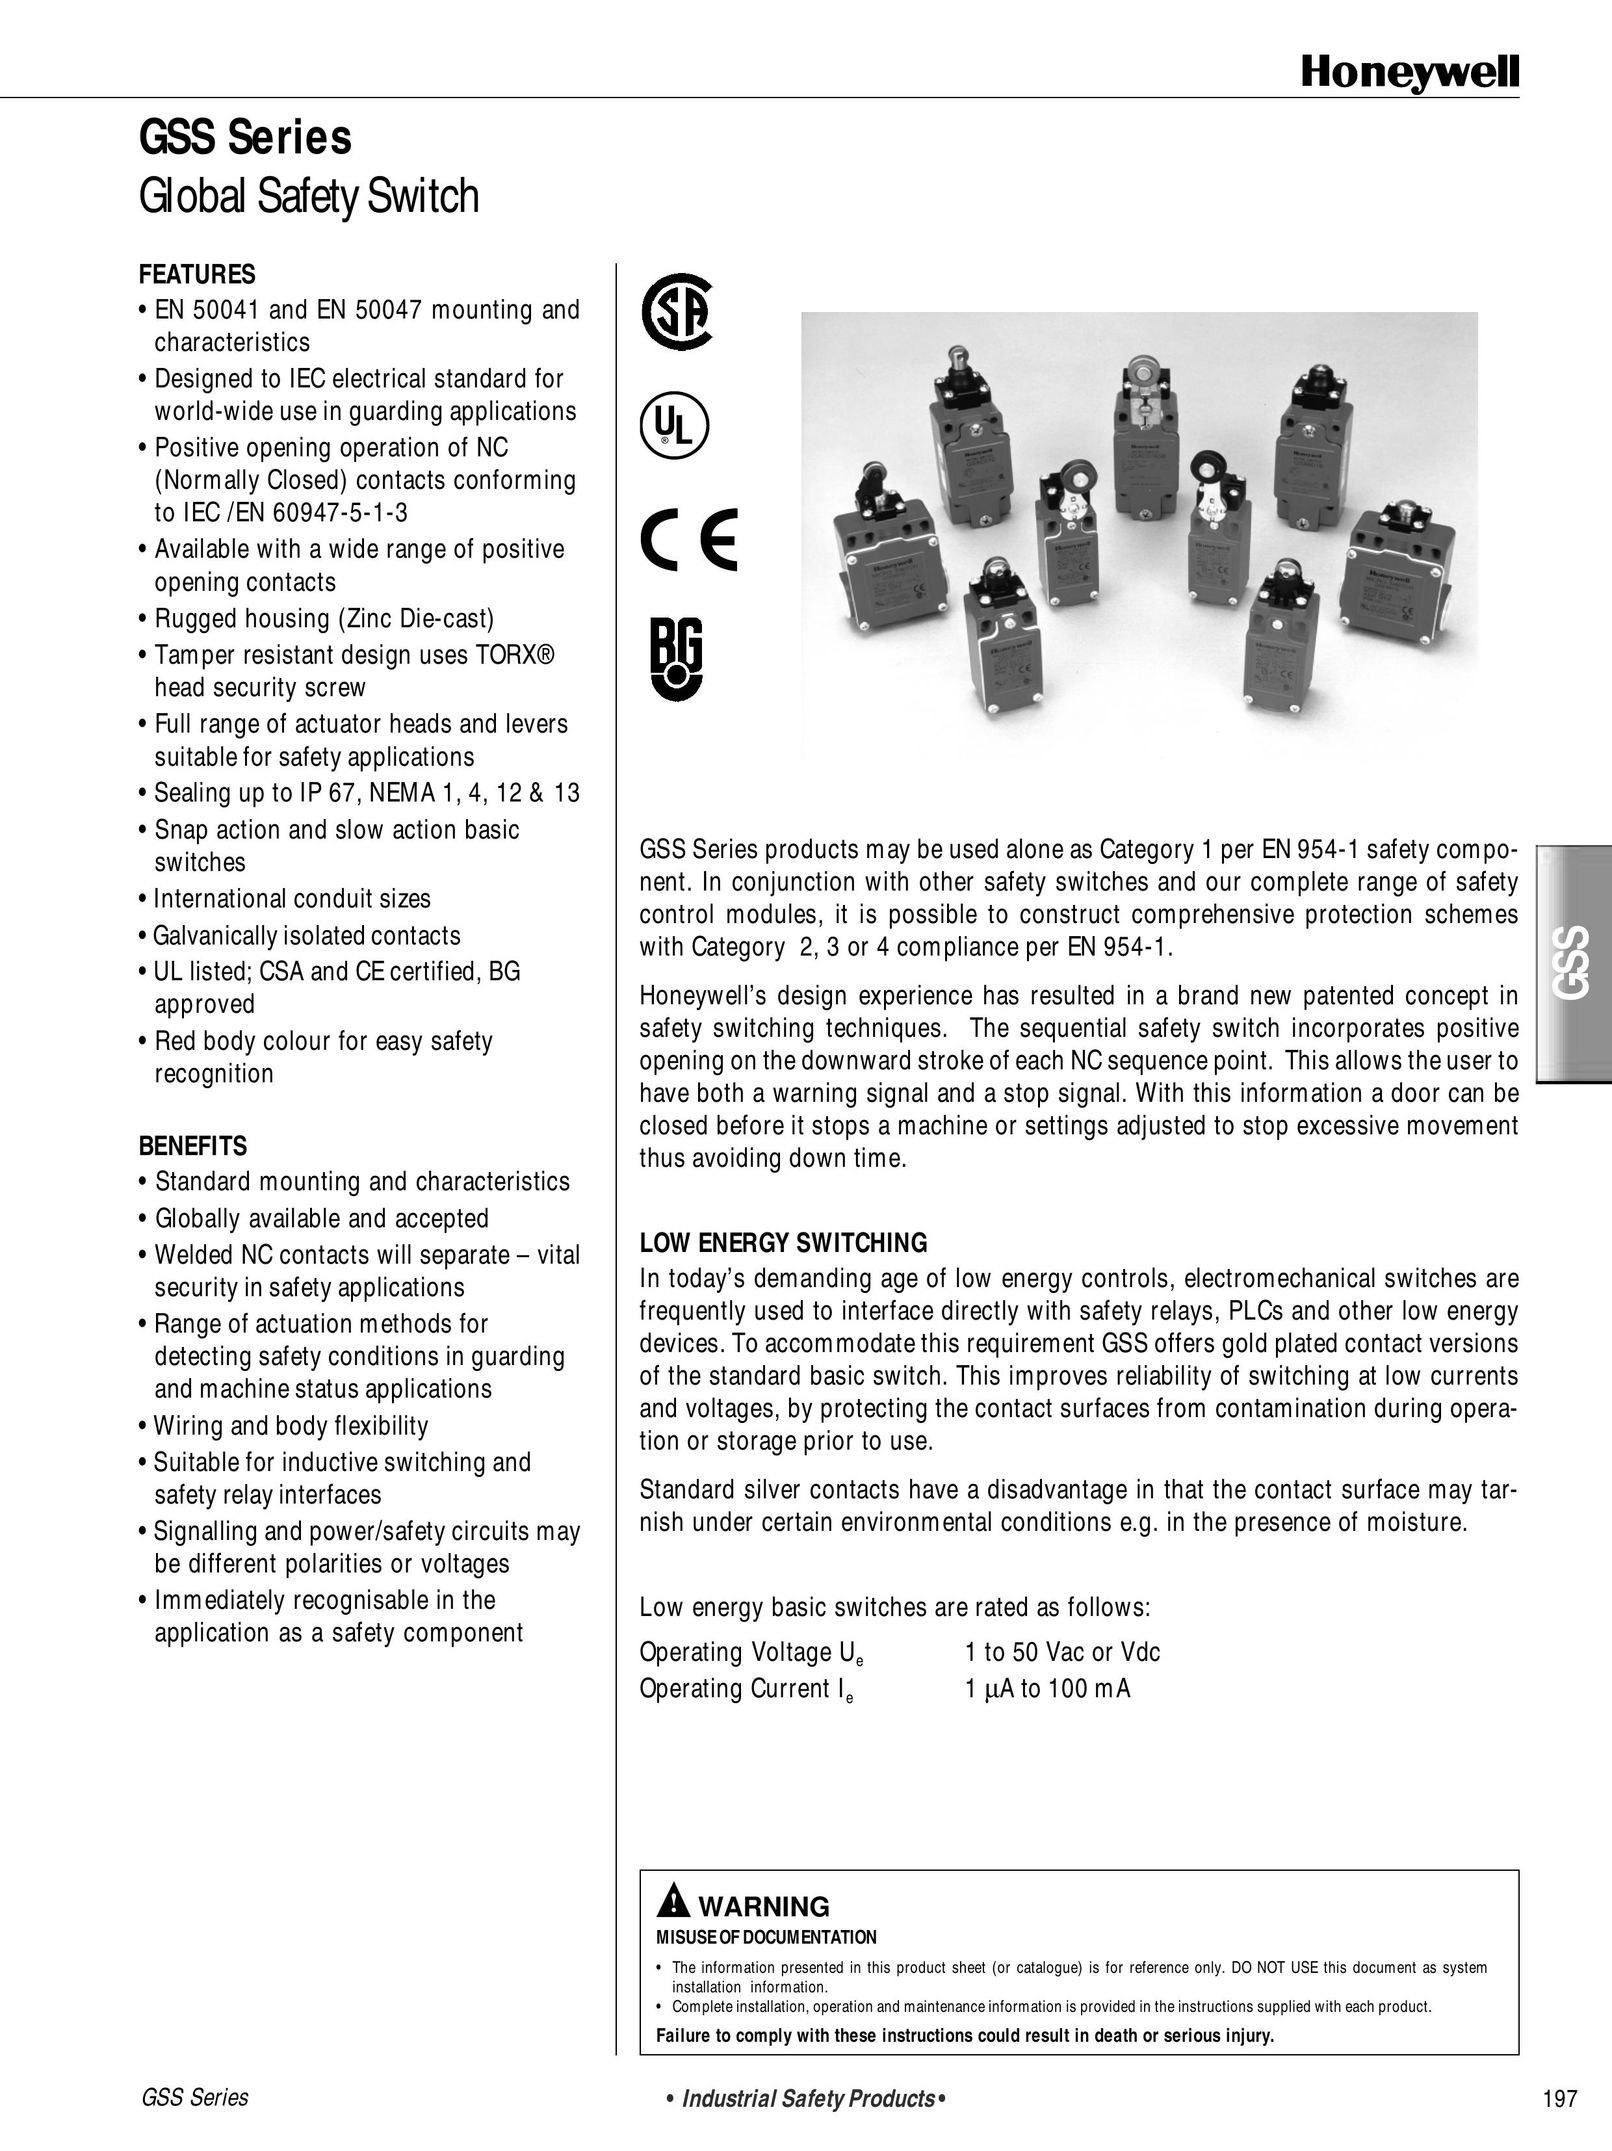 Honeywell GSS Series Plumbing Product User Manual